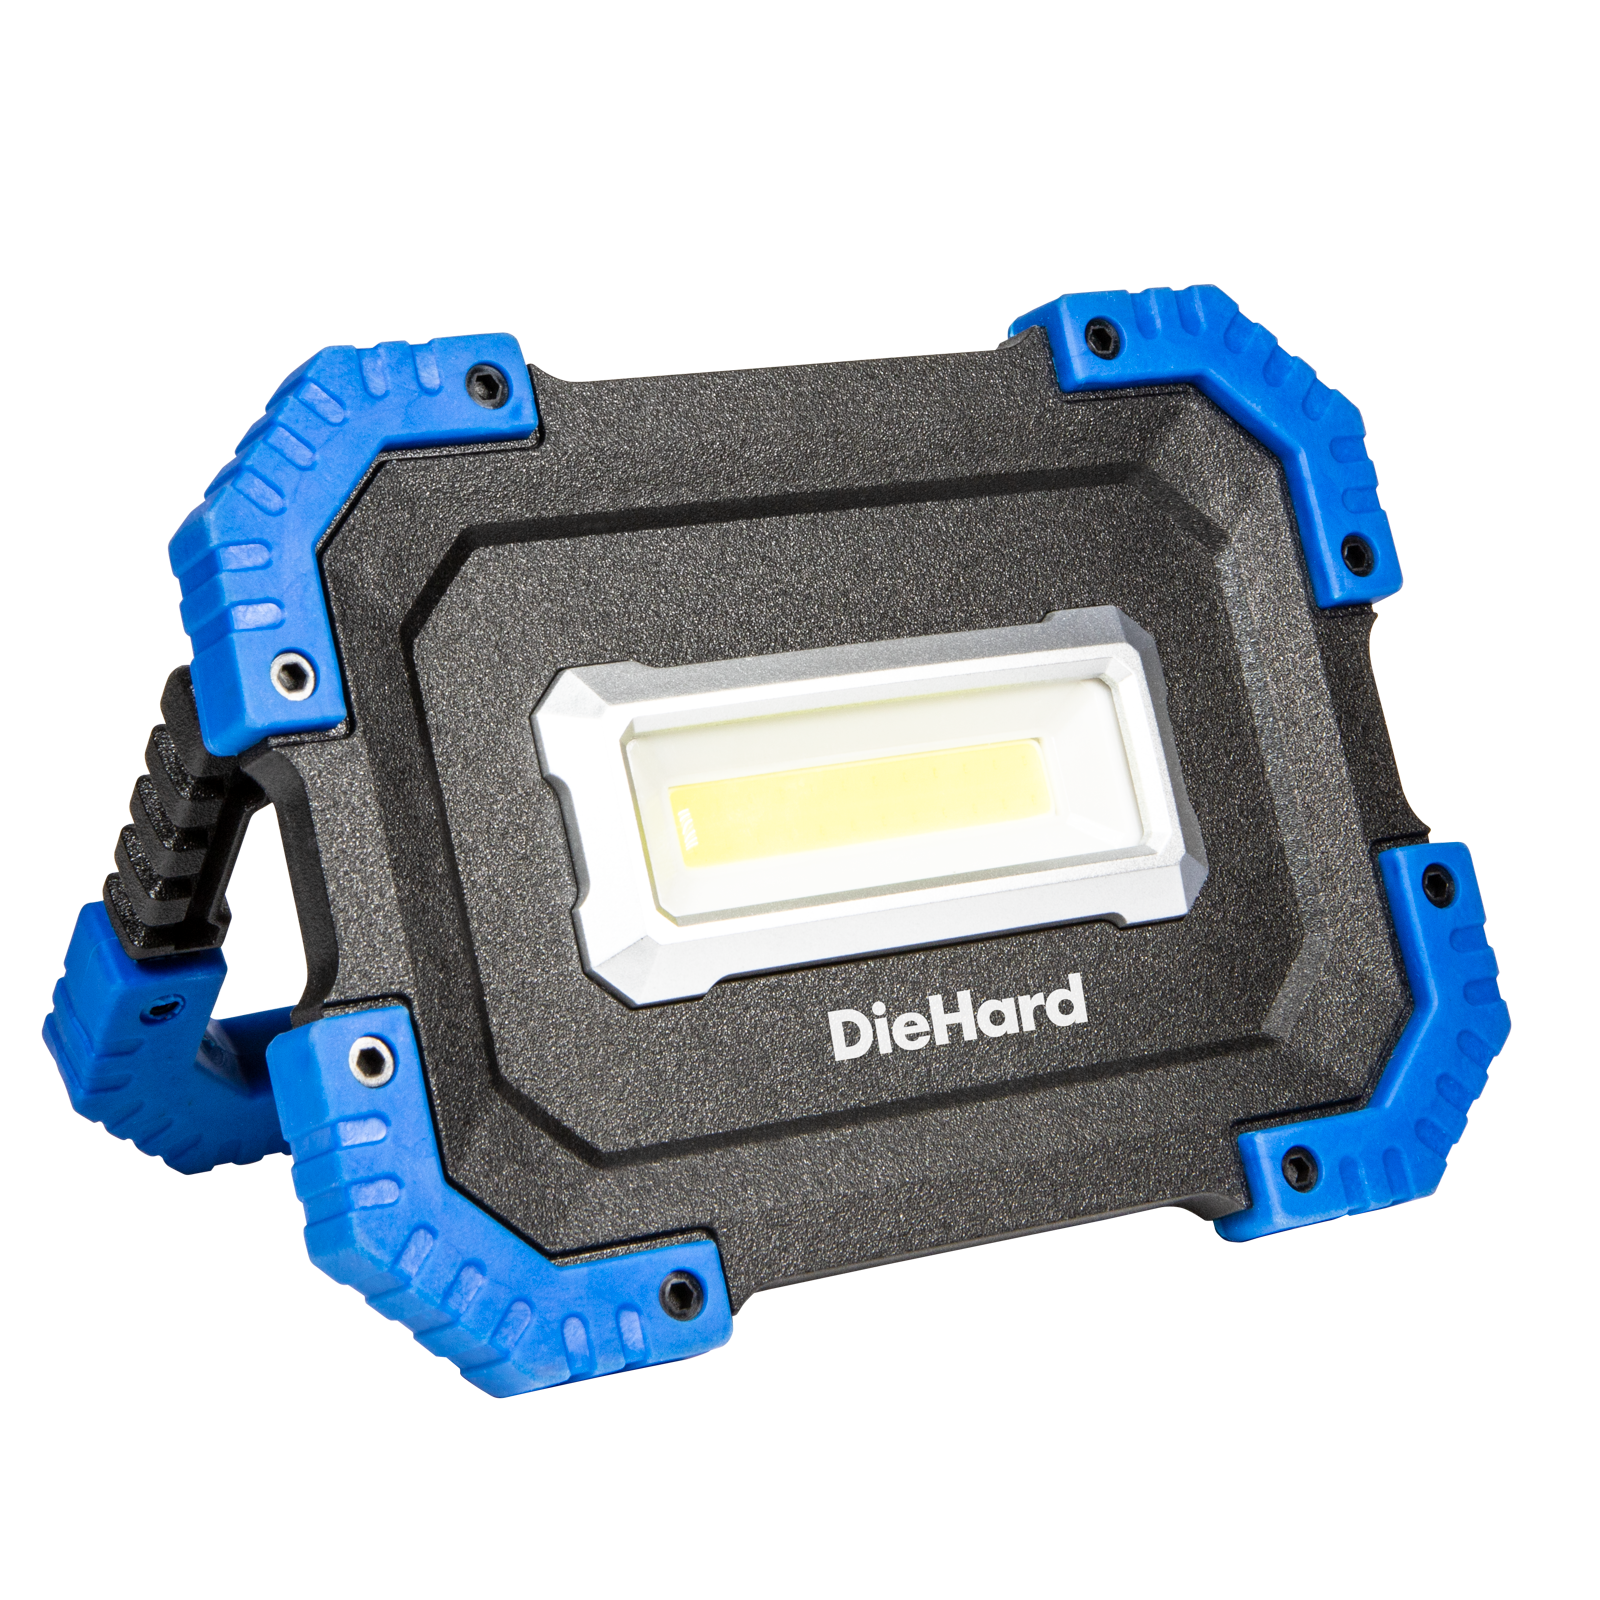 DieHard Rechargeable 1500 Lumen Utility Light and Power Bank 